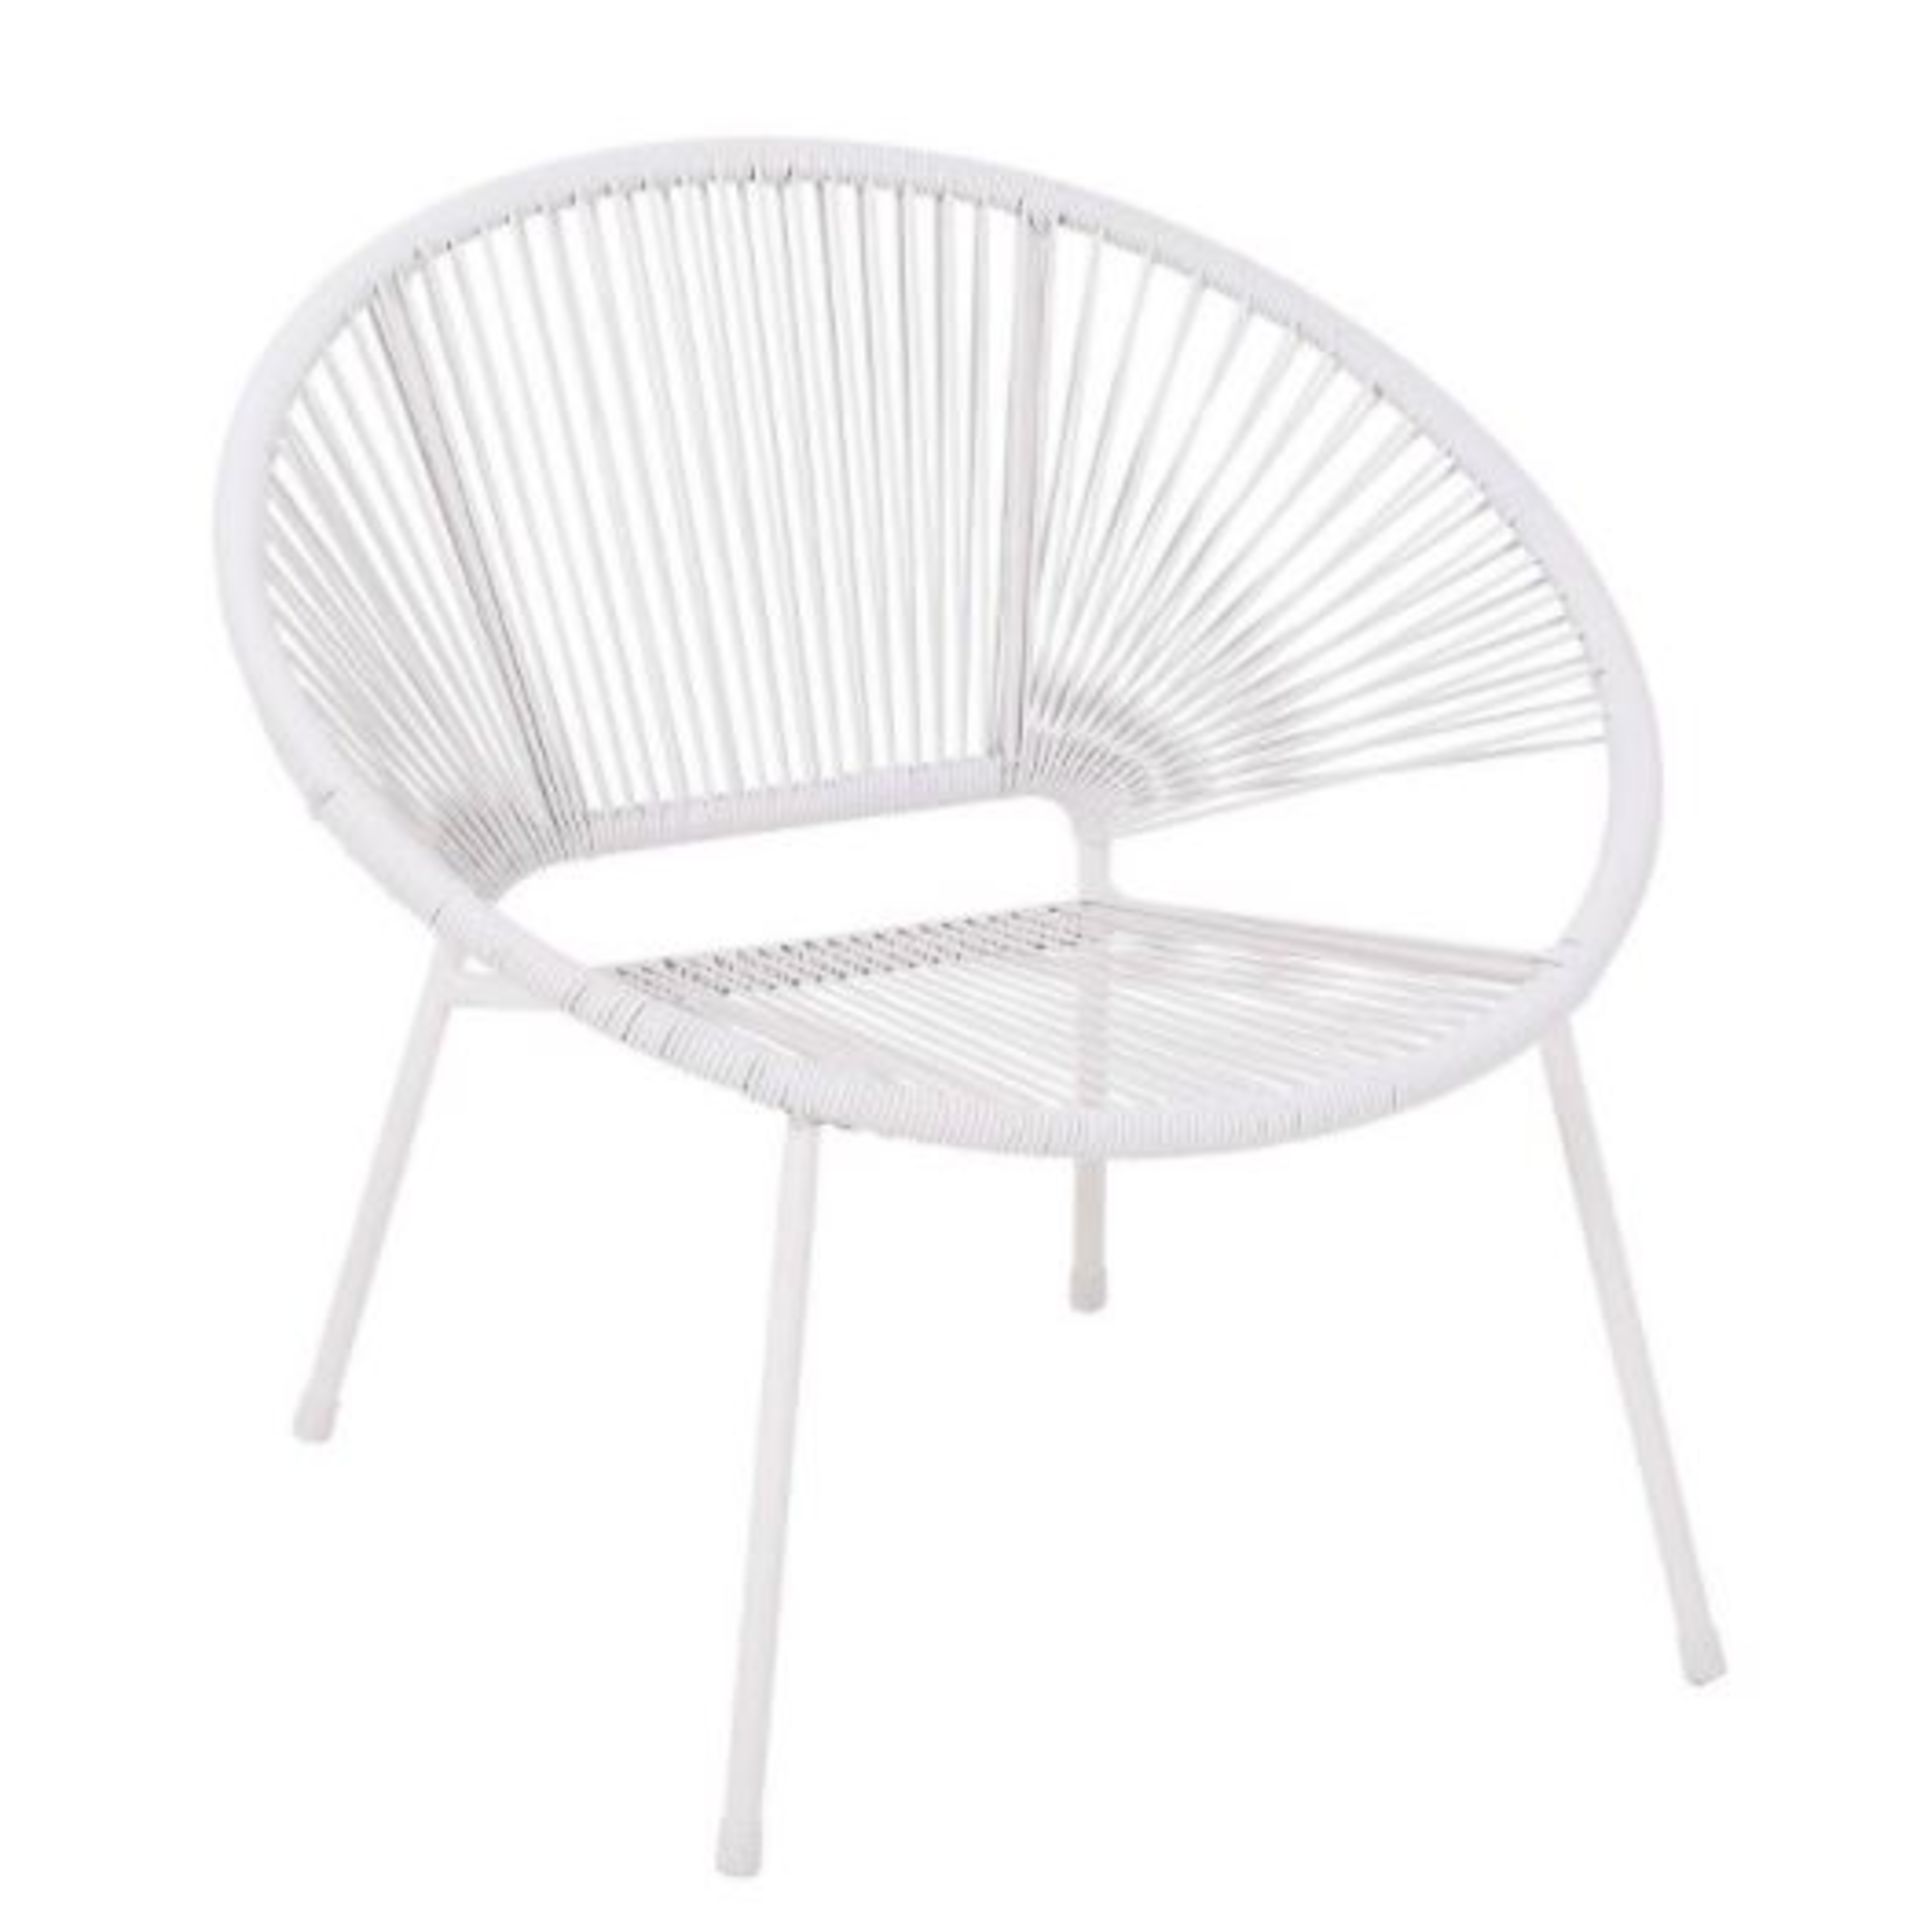 (R7E) 2x Acapulco Garden Chair Grey RRP £35 Each. H75 x W82 x D72.5cm. (1x has Loose Rattan) - Image 2 of 5